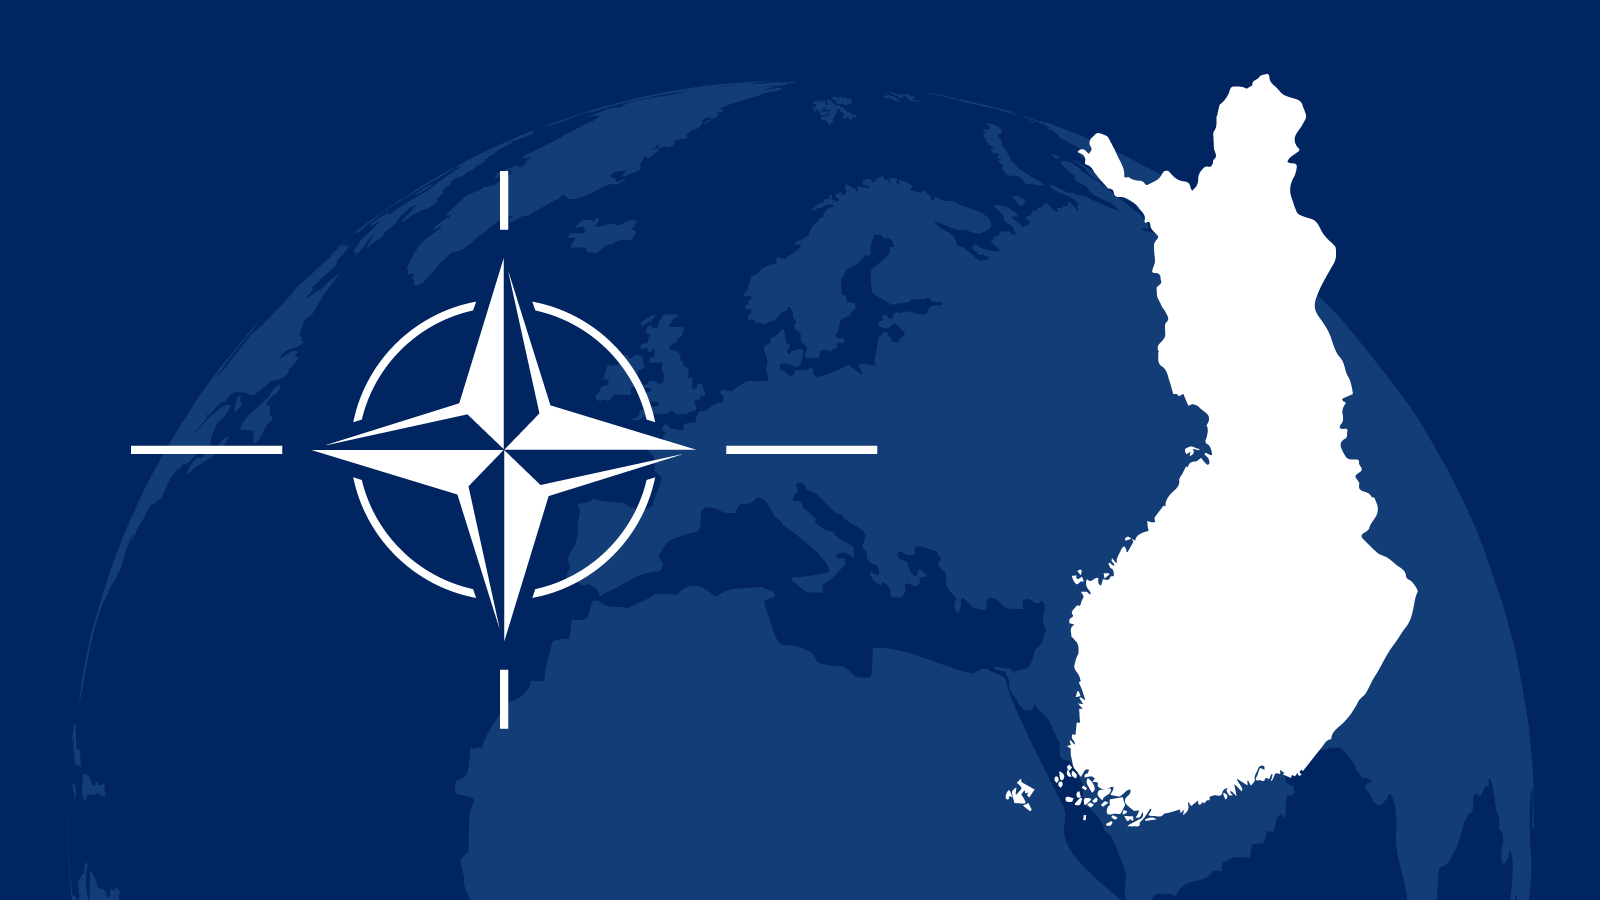 NATO:n logo ja Suomen kartta. Lähde: Valtioneuvosto